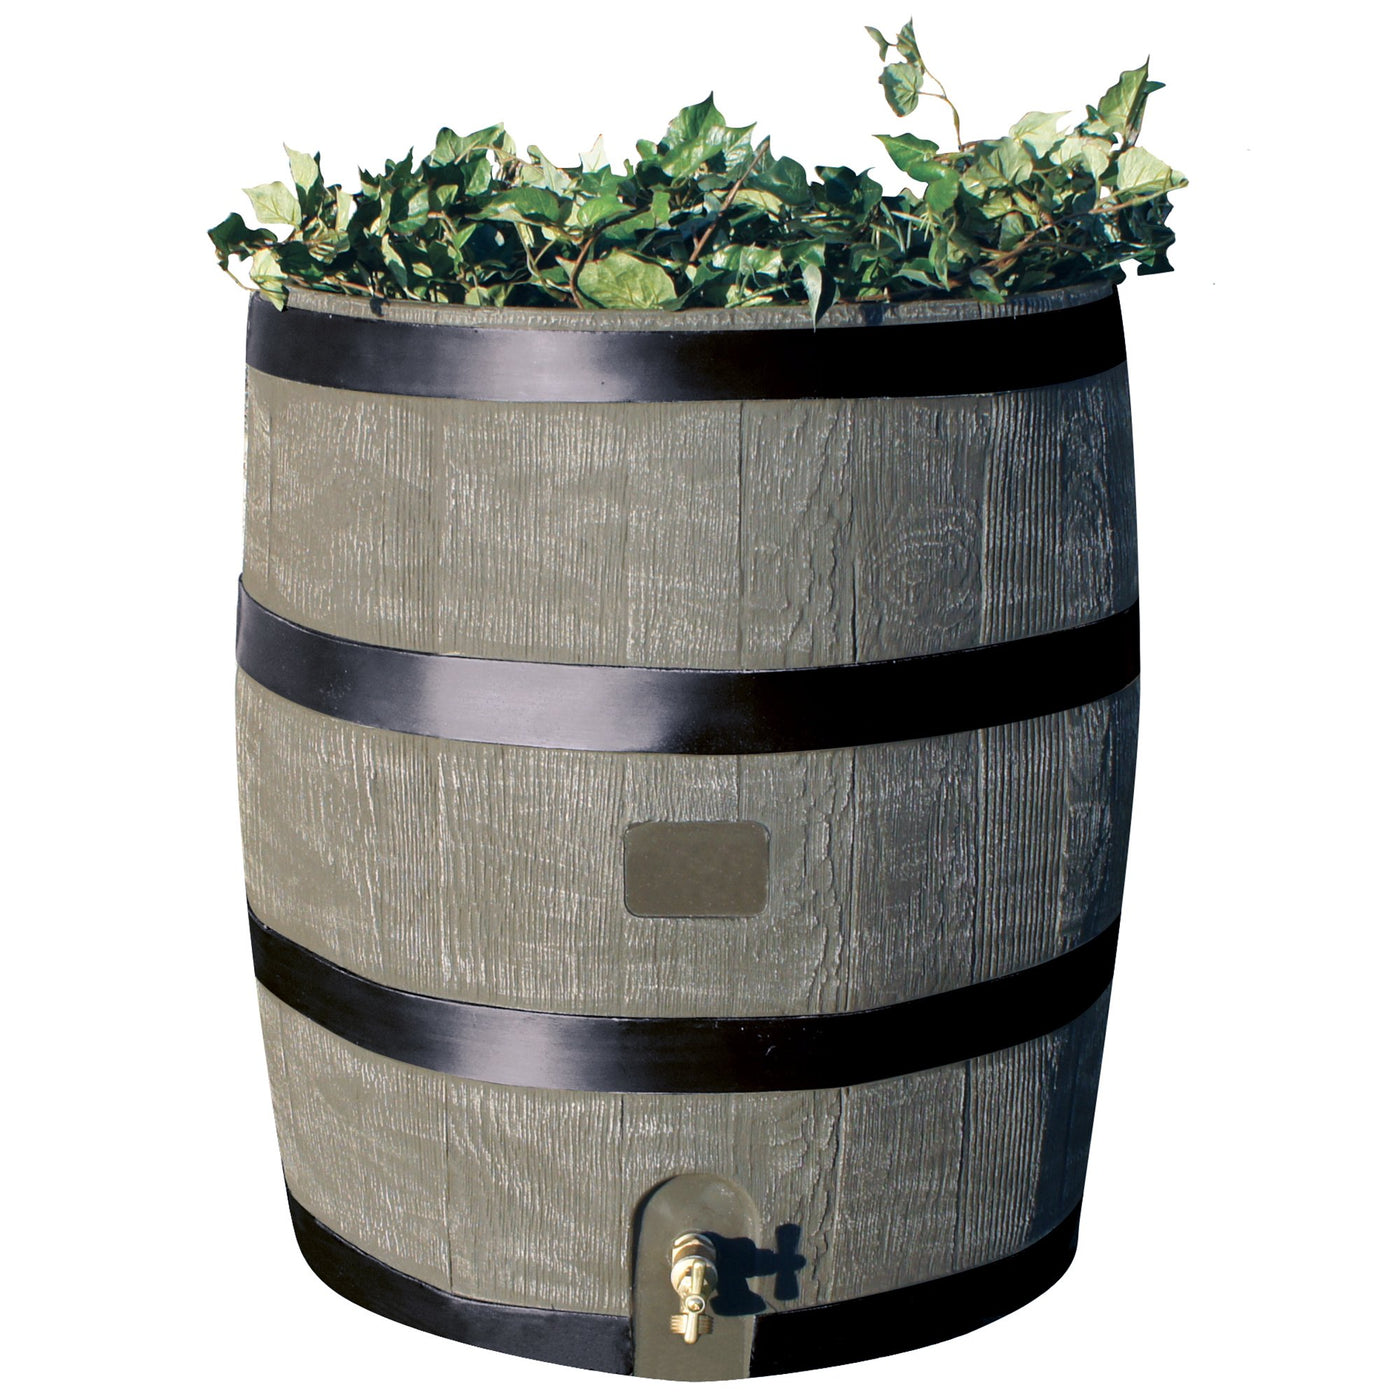 RTS Rain Barrel with Planter 35 Gallon - GreenLivingSupply-Store